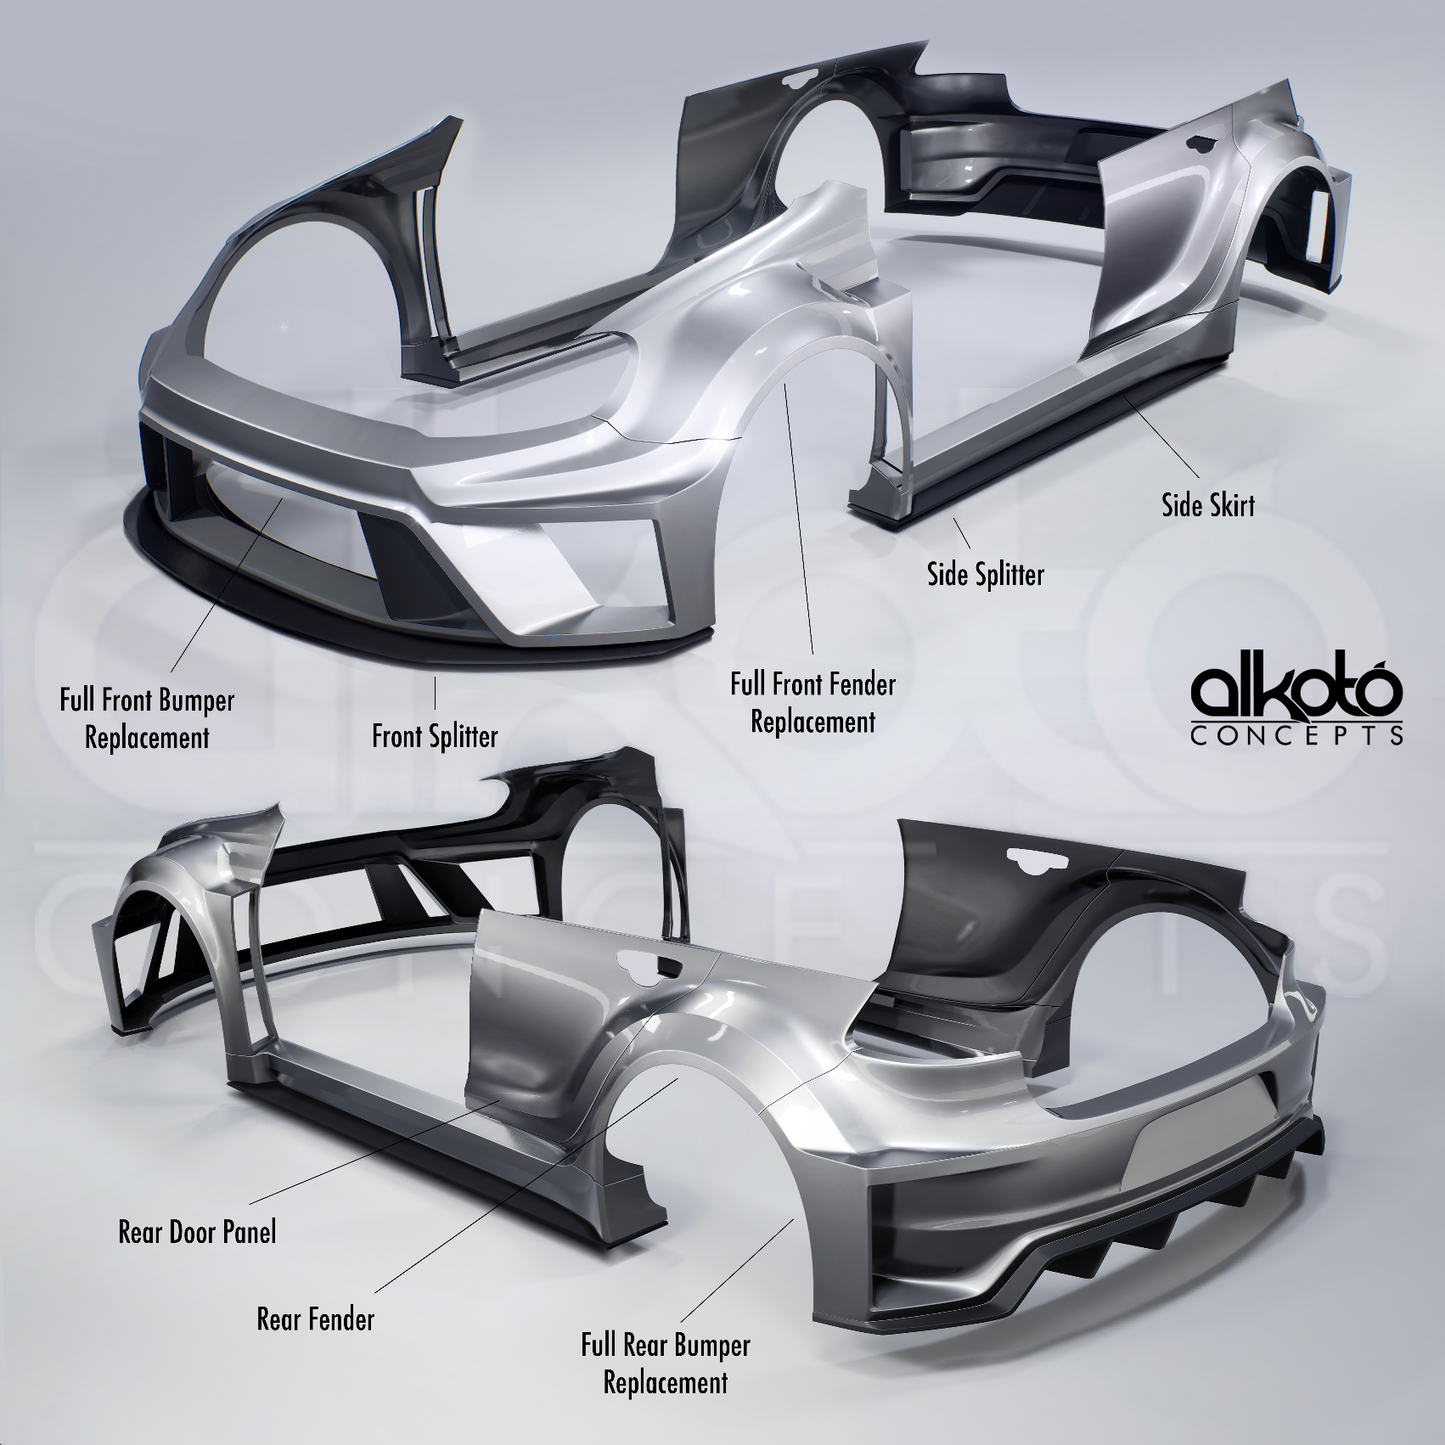 Alkoto Concepts VW MK6 Widebody Program